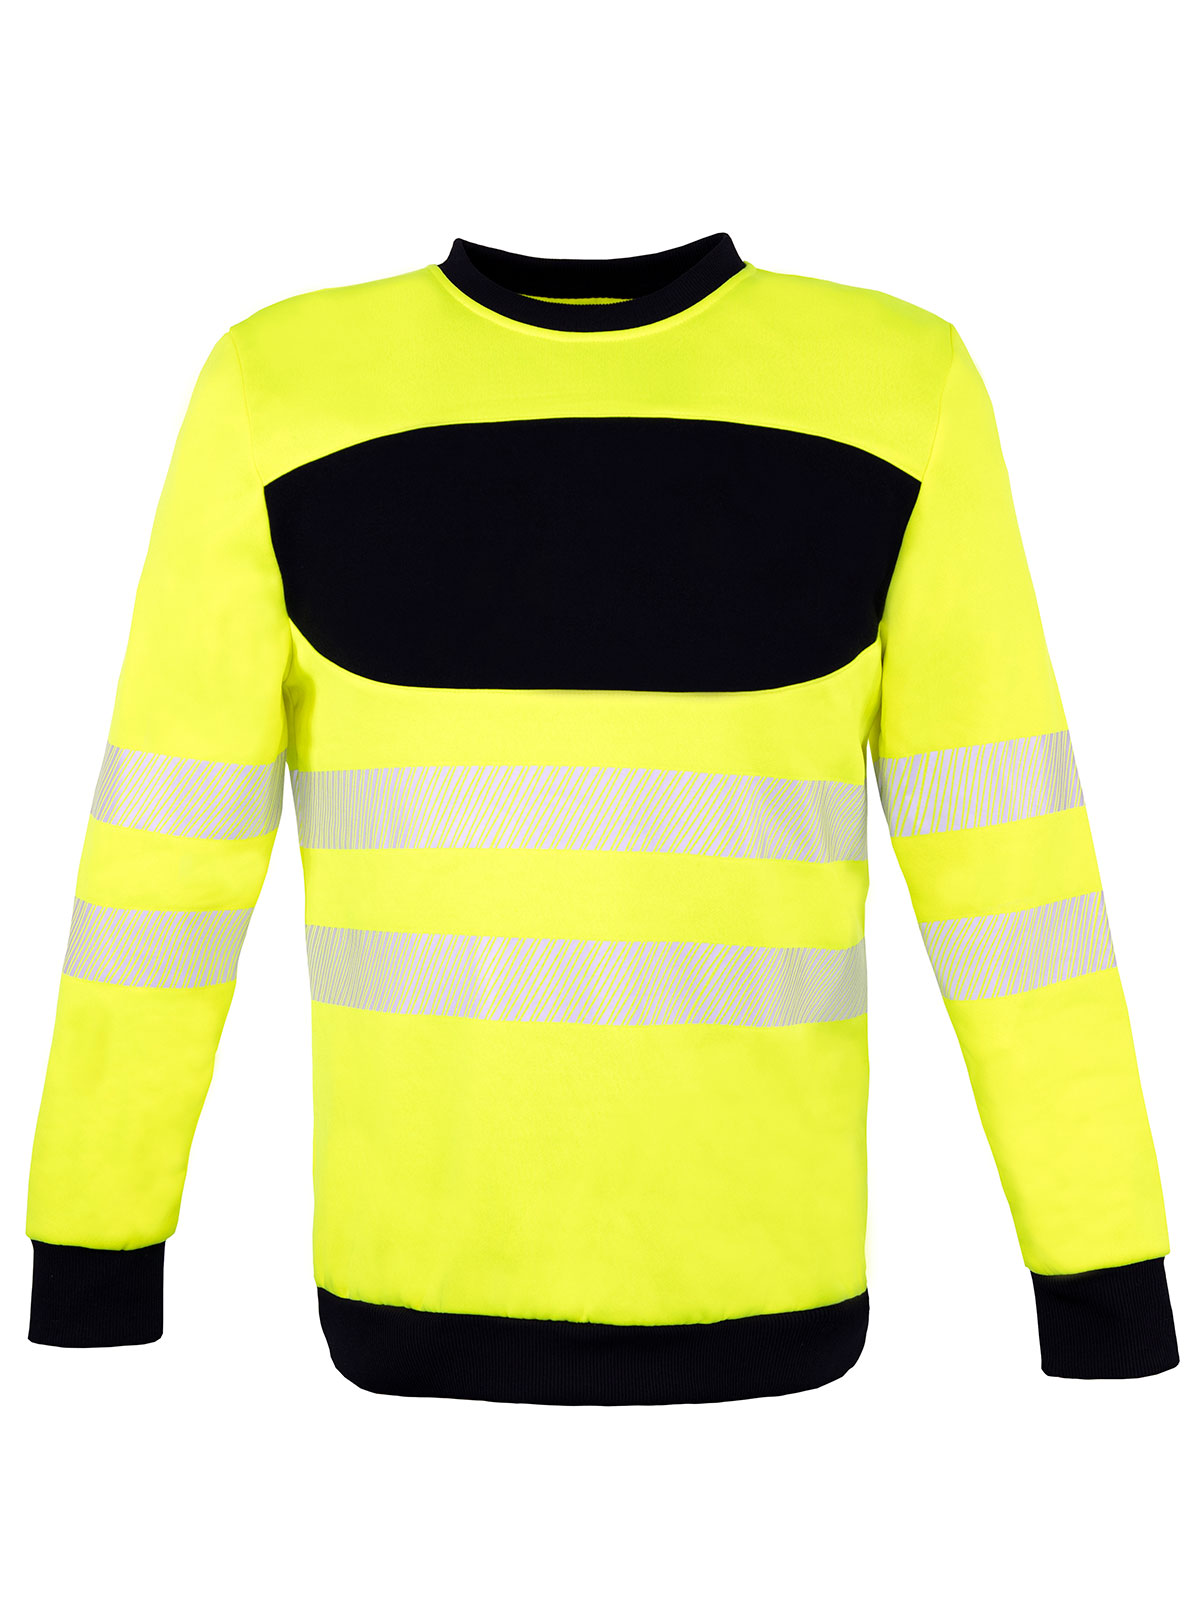 sweatshirt-yellow-black.webp